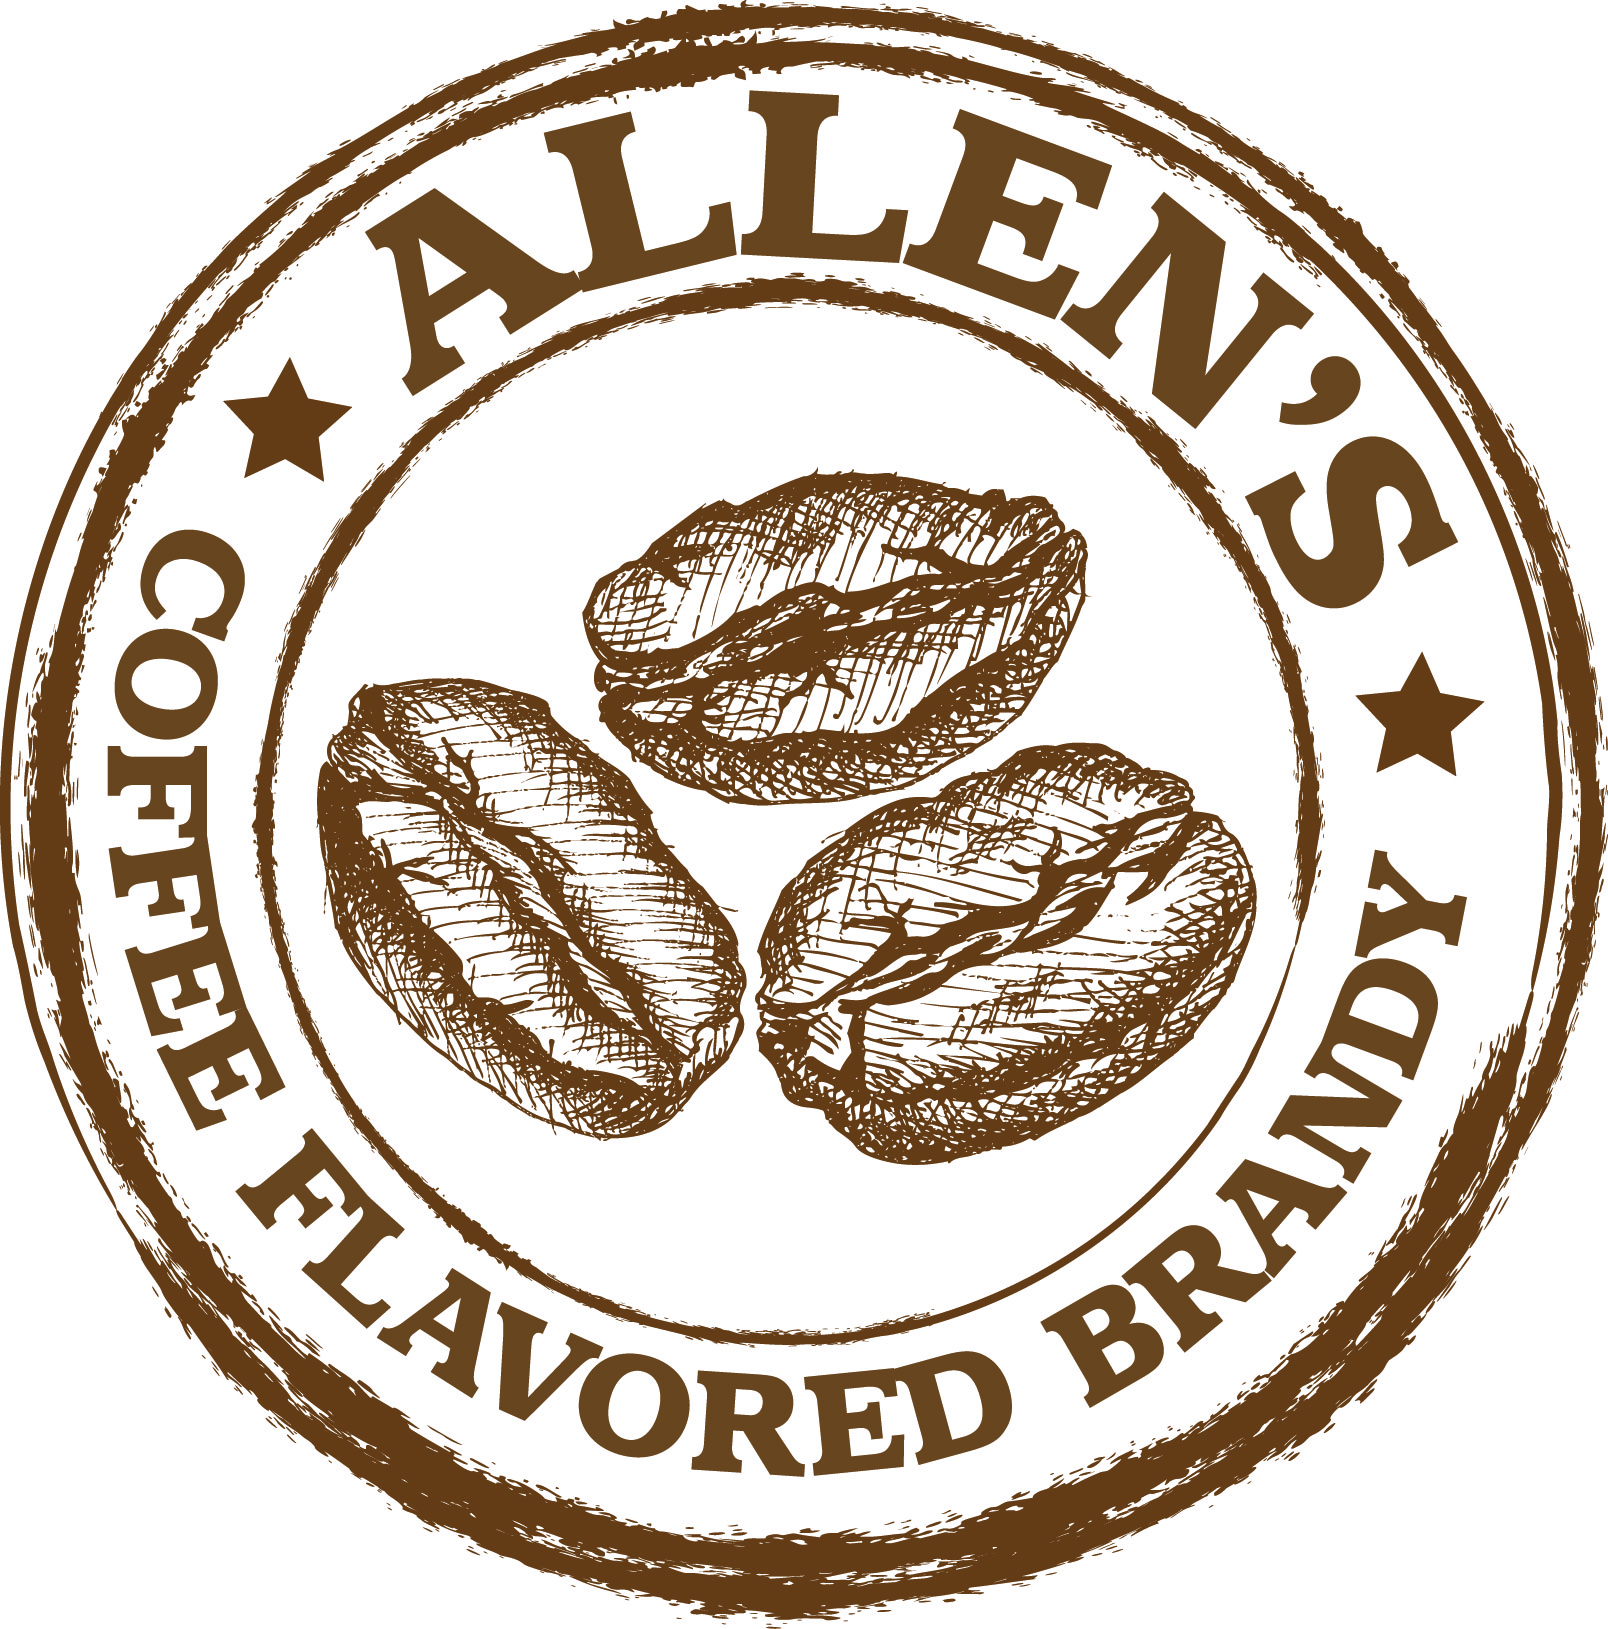 ALLEN'S COFFEE FLAVORED BRANDY LOGO STAMP